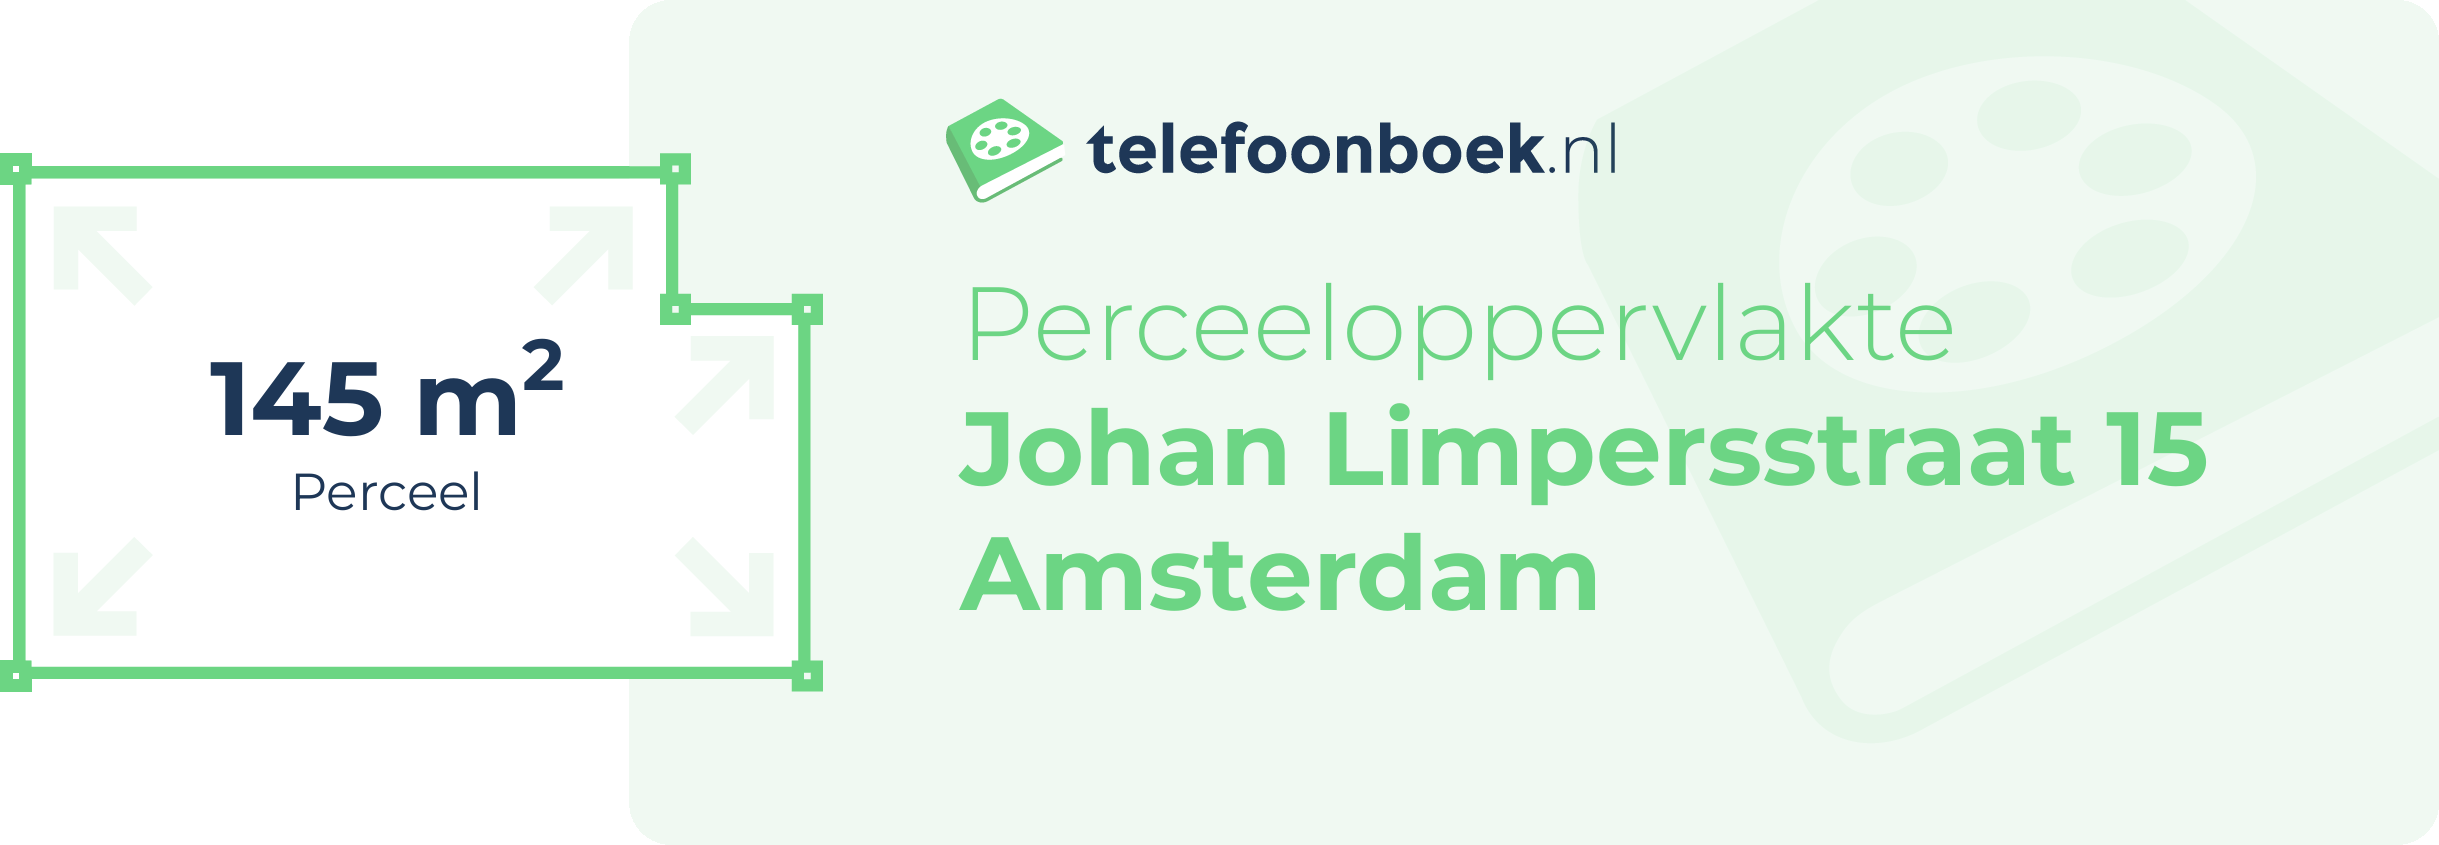 Perceeloppervlakte Johan Limpersstraat 15 Amsterdam